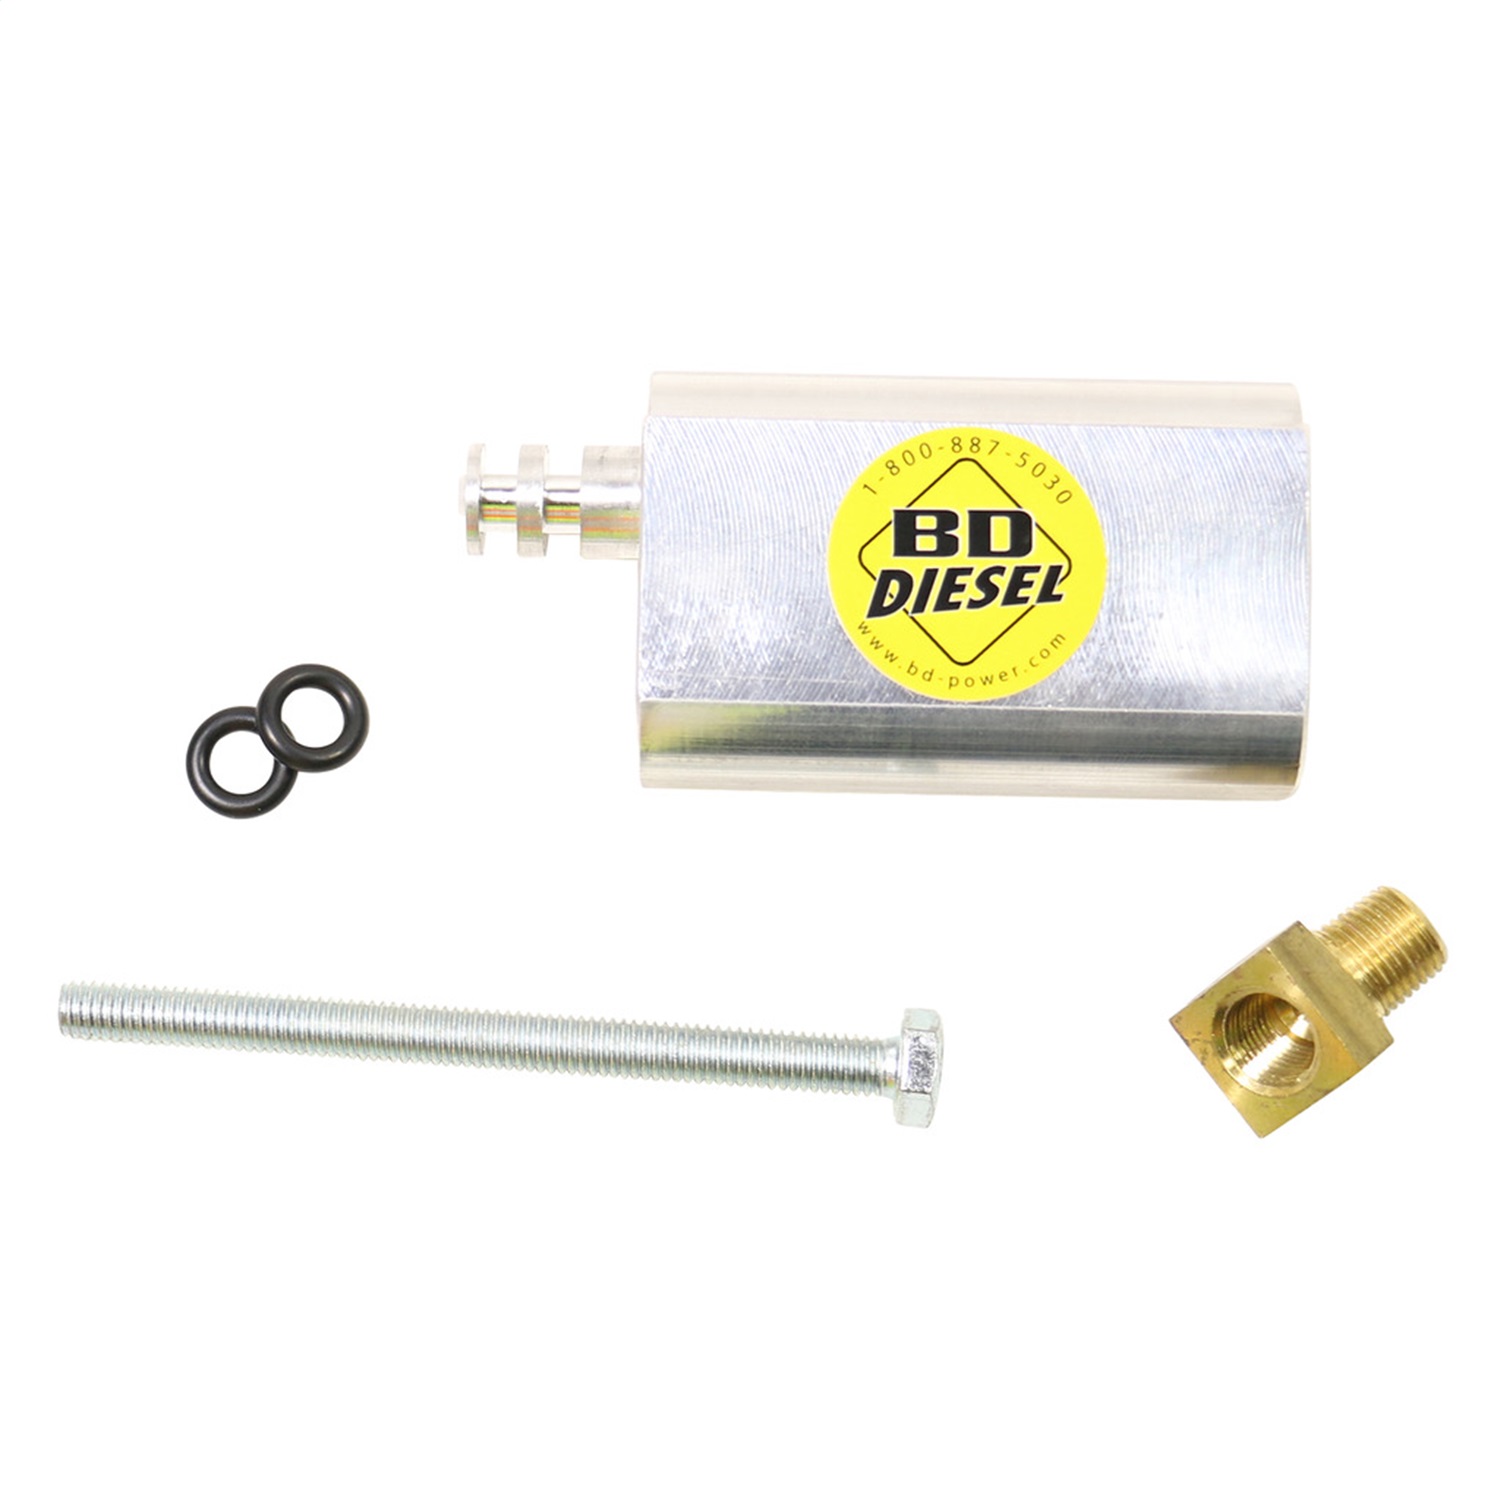 BD Diesel 1061529 Transmission Pressure Gauge Adapter Kit